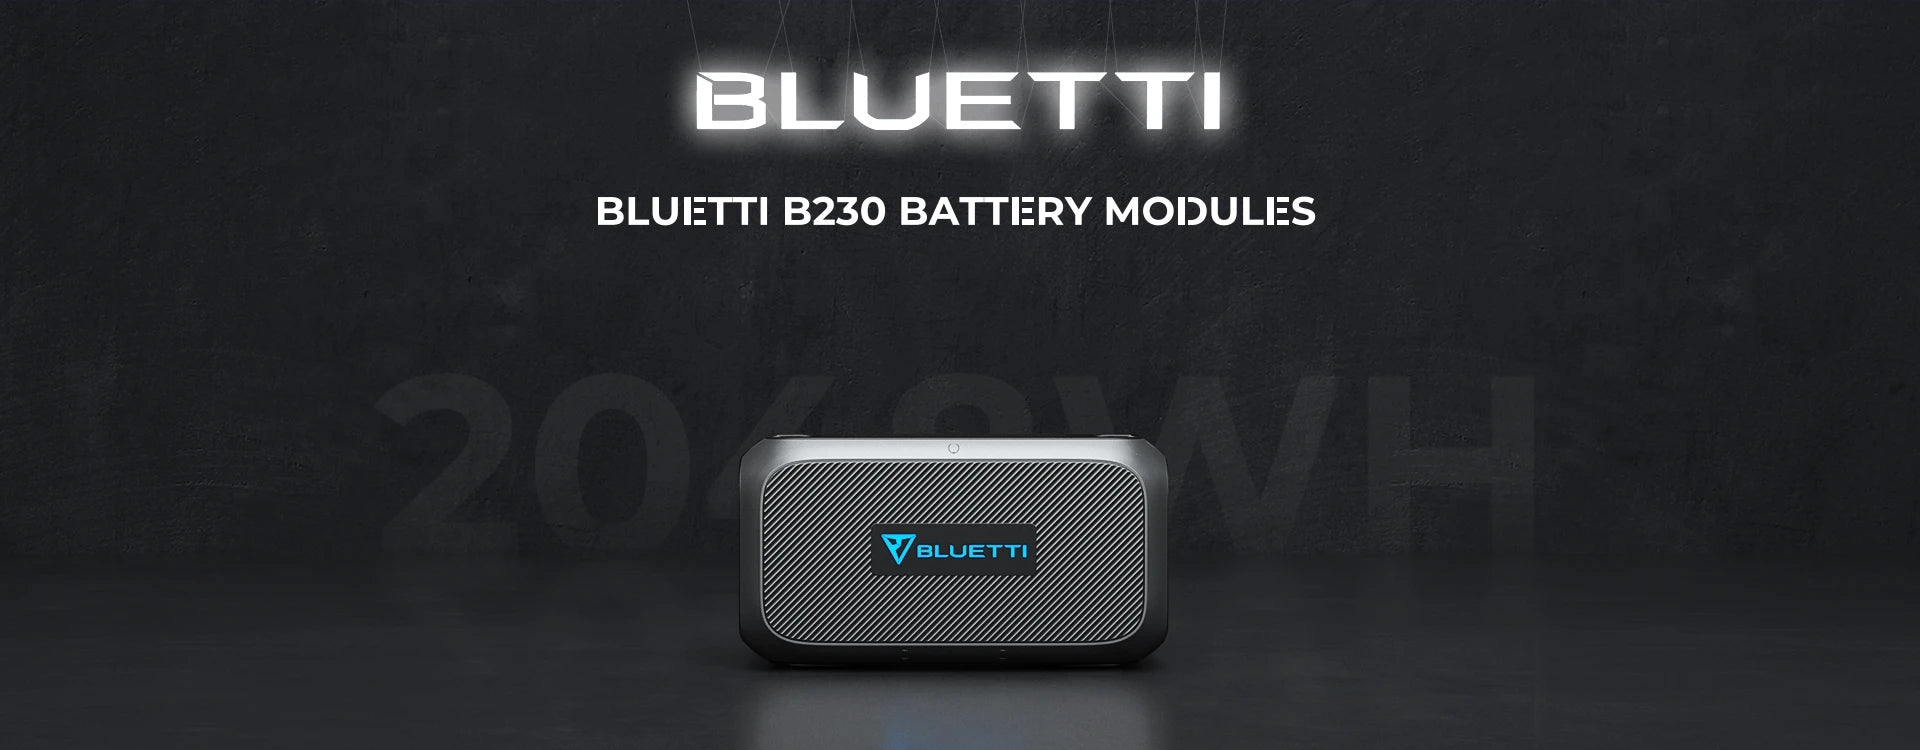 bluetti b230 expation battery